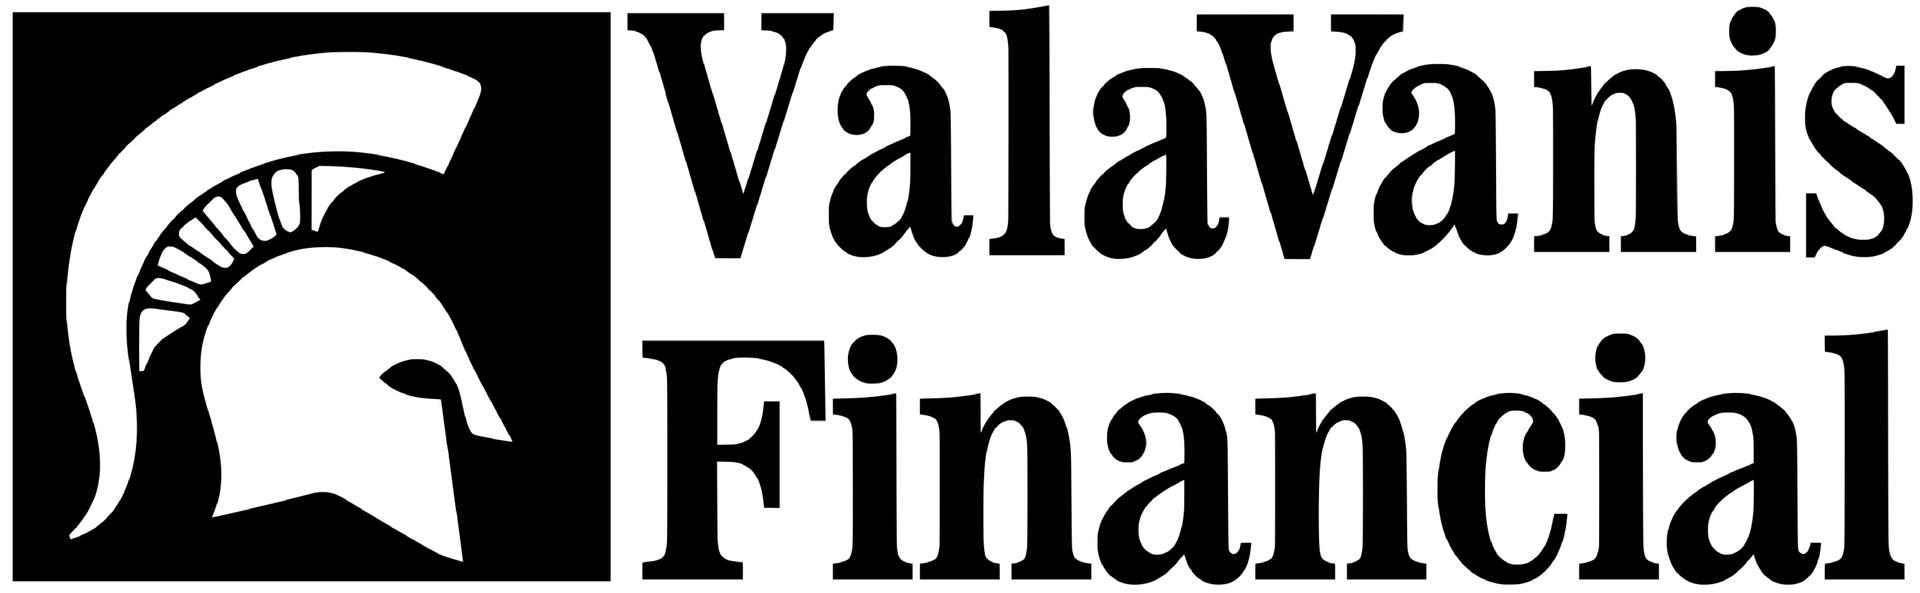 ValaVanis Financial